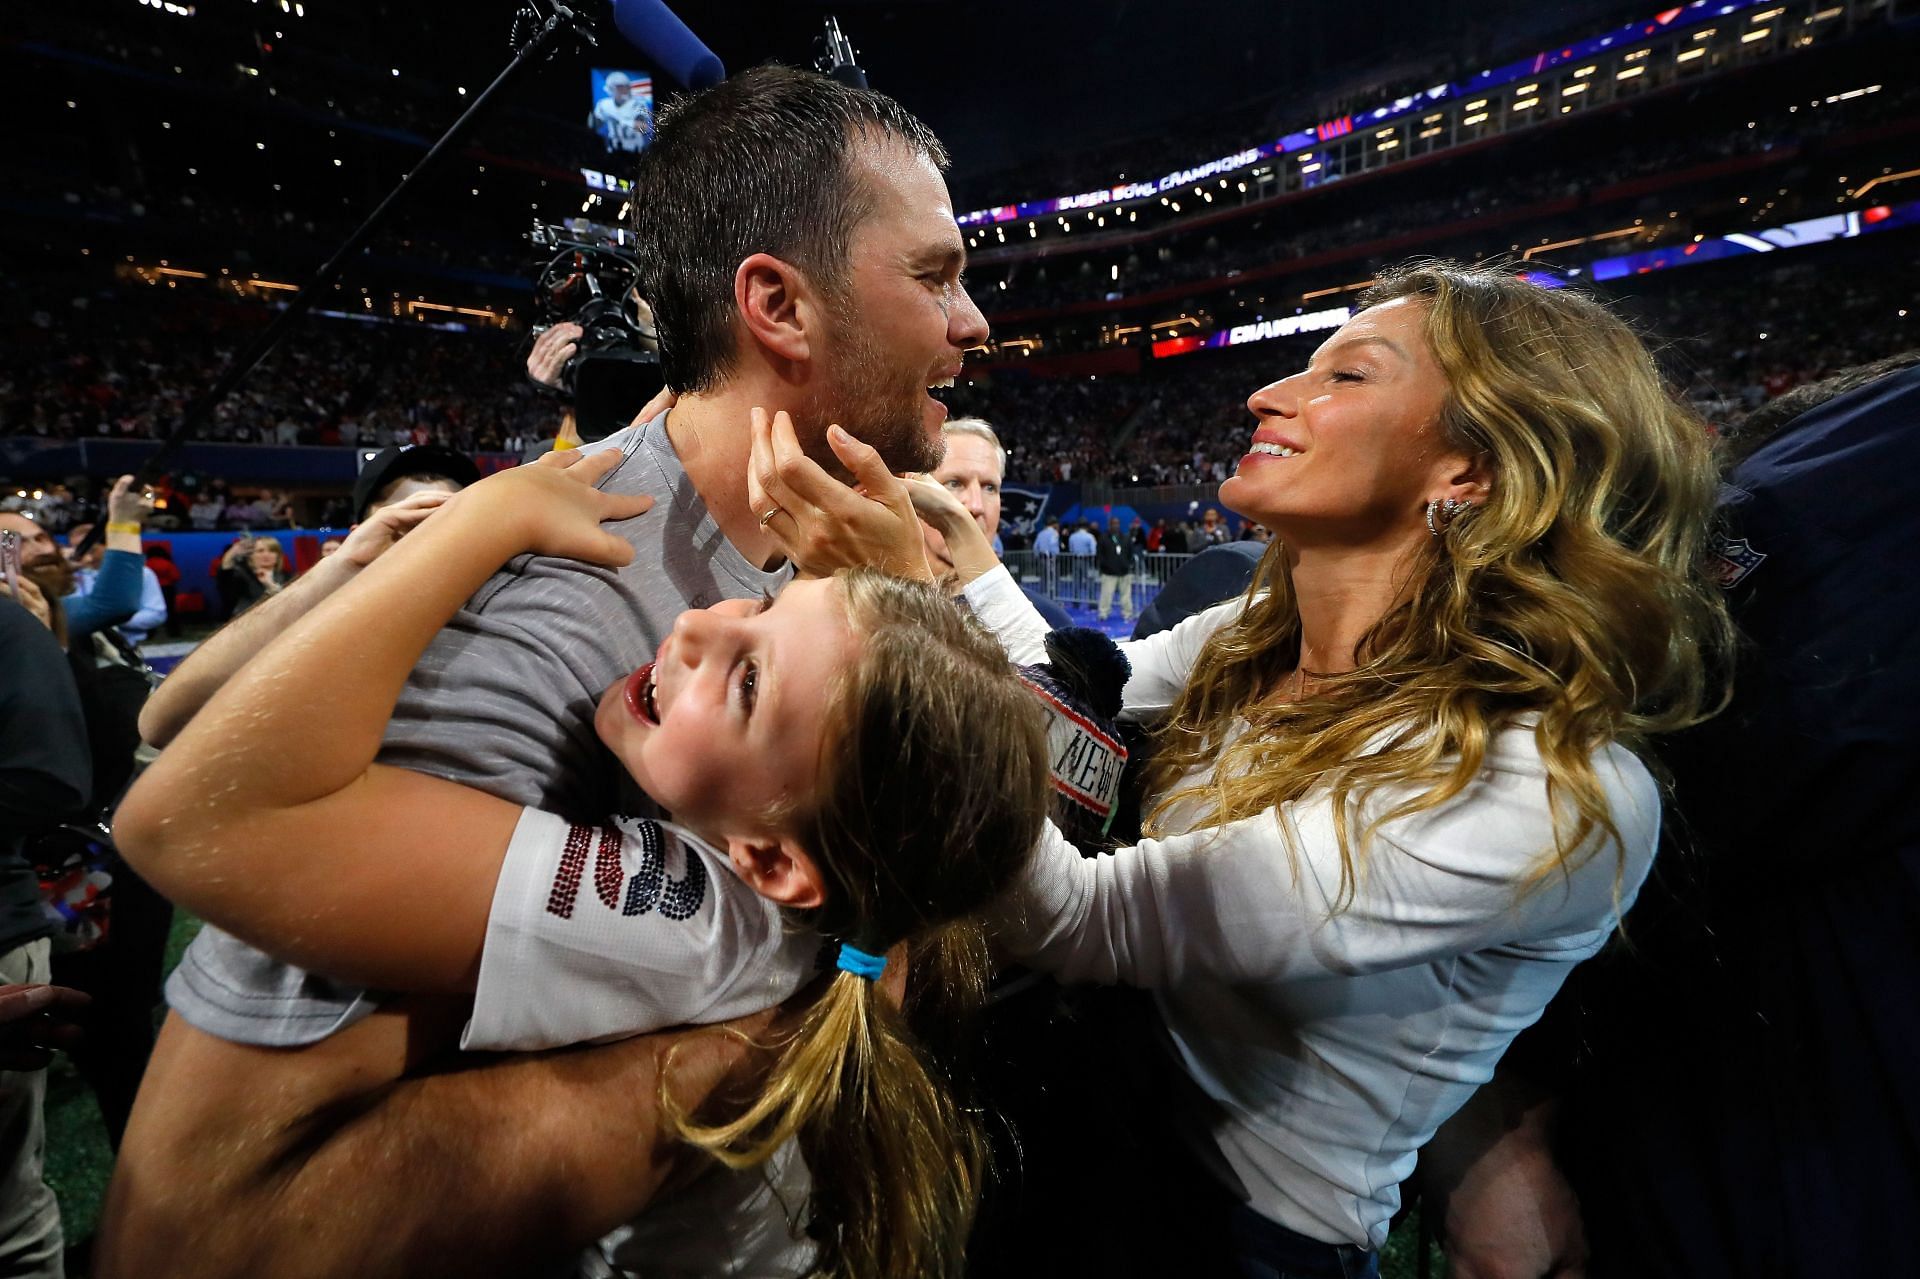 Tom Brady celebrating a Super Bowl win with wife Gisele Bundchen and kids